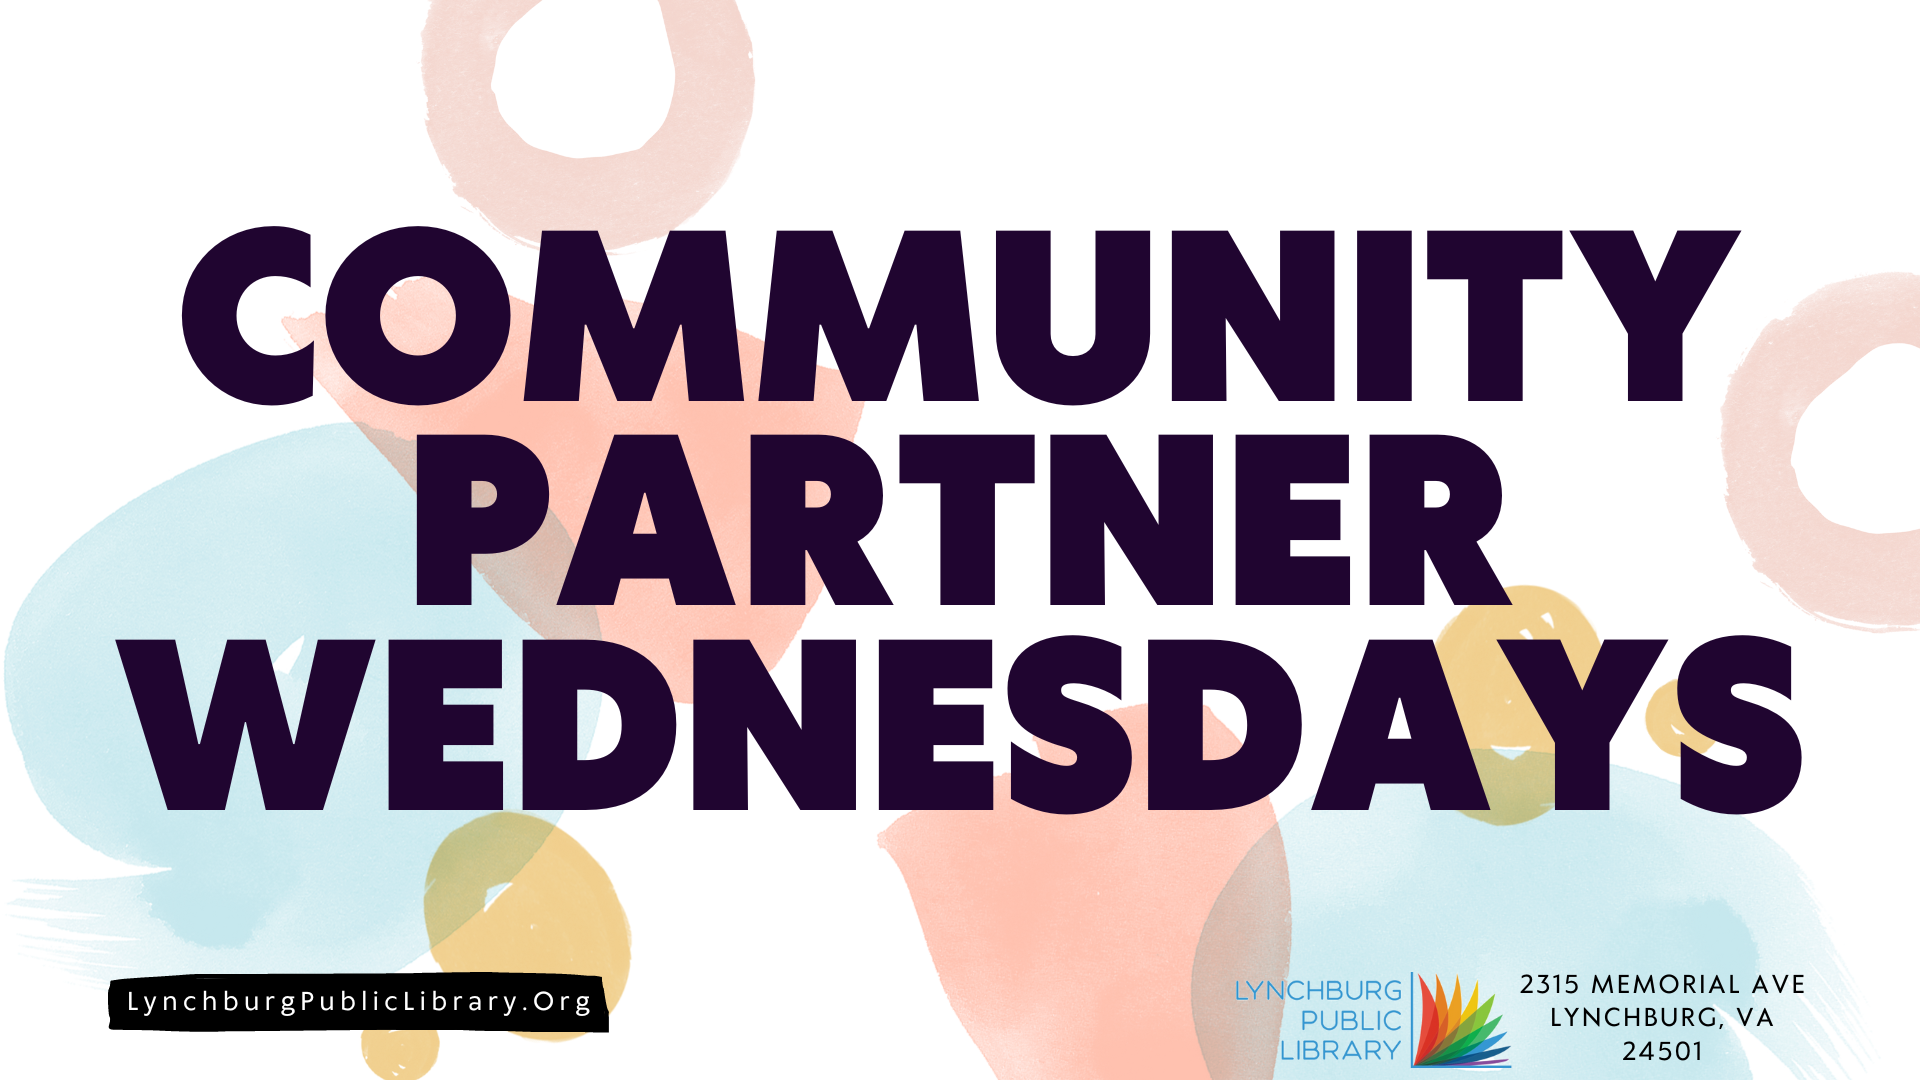 Community Partner Wednesdays; lynchburgpubliclibrary.org; Lynchburg Public Library; 2315 Memorial Ave, Lynchburg, VA 24501